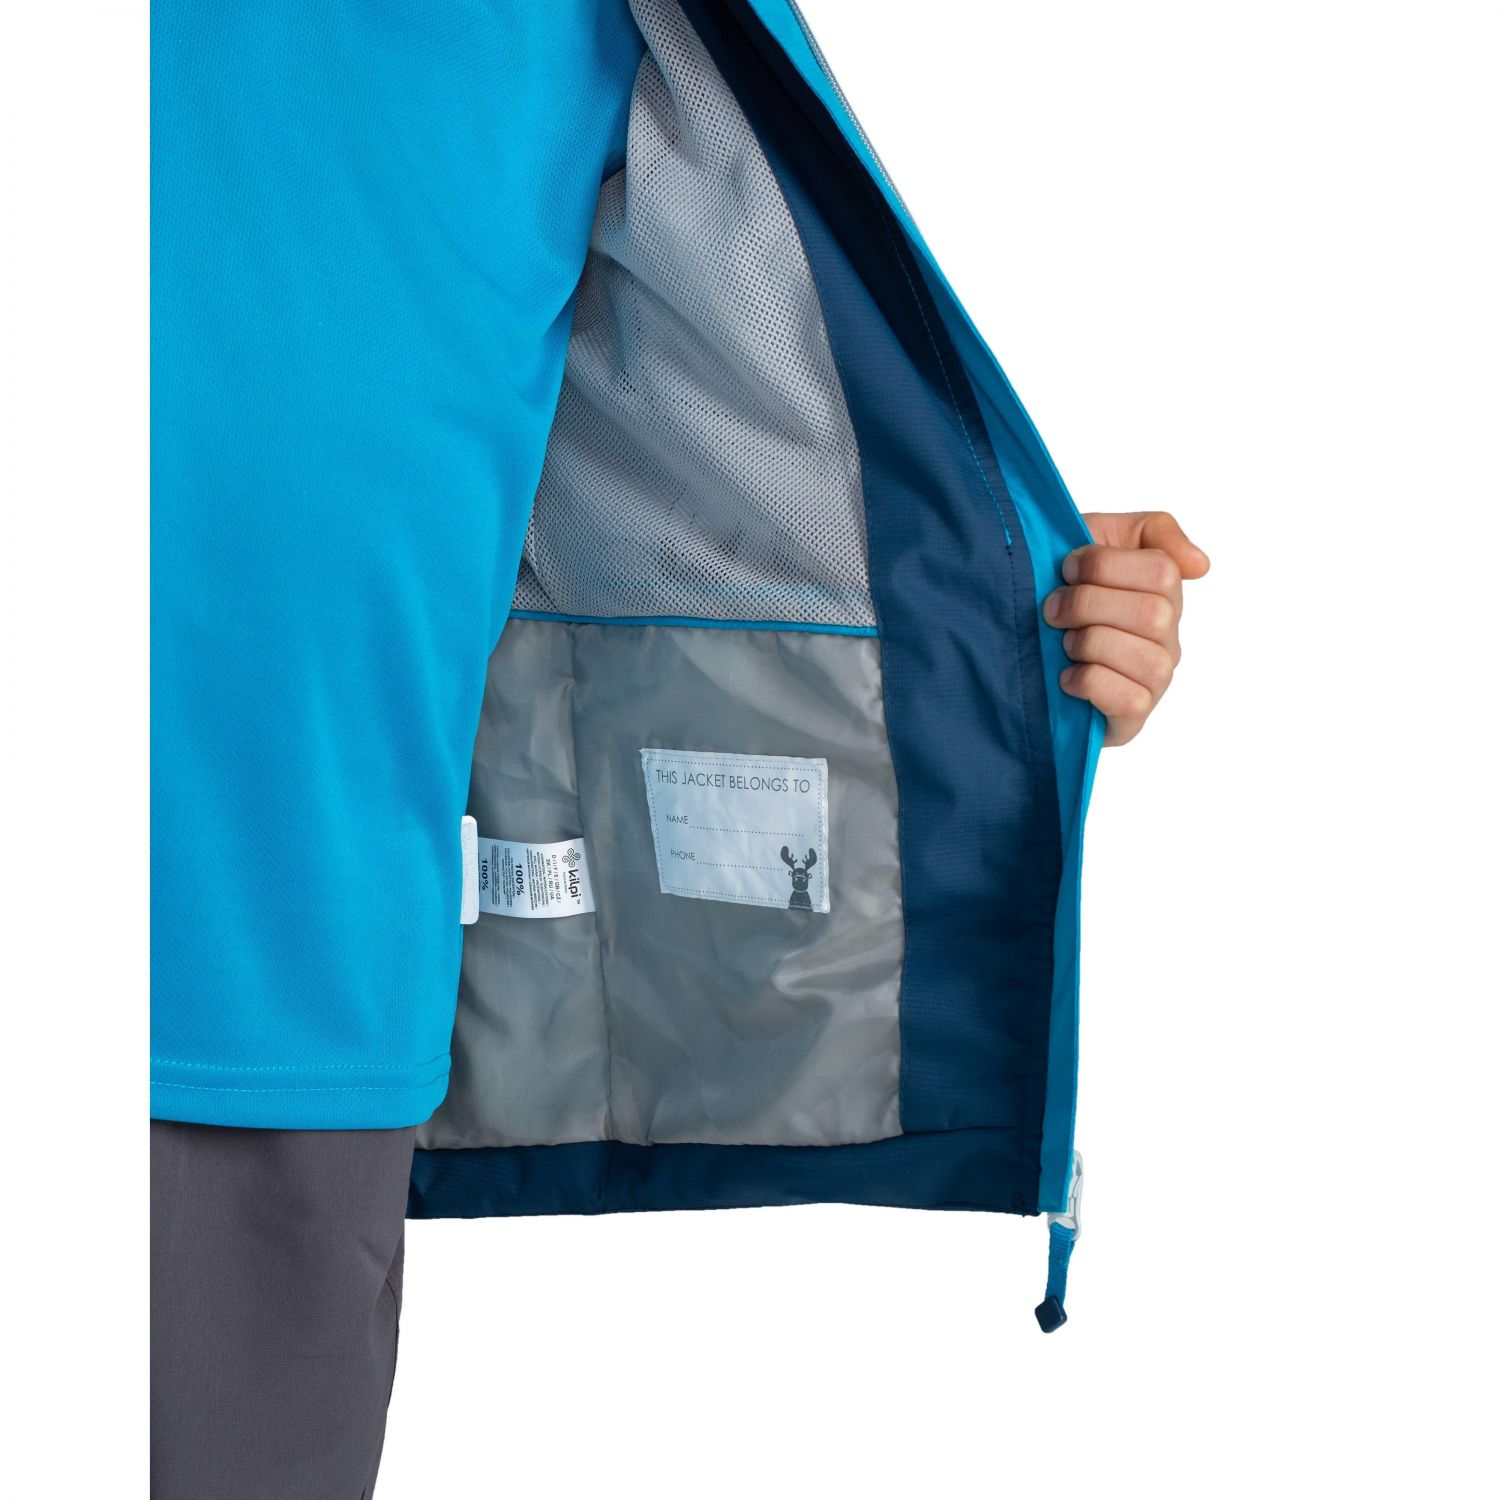 Kilpi Orleti, rain jacket, junior, blue